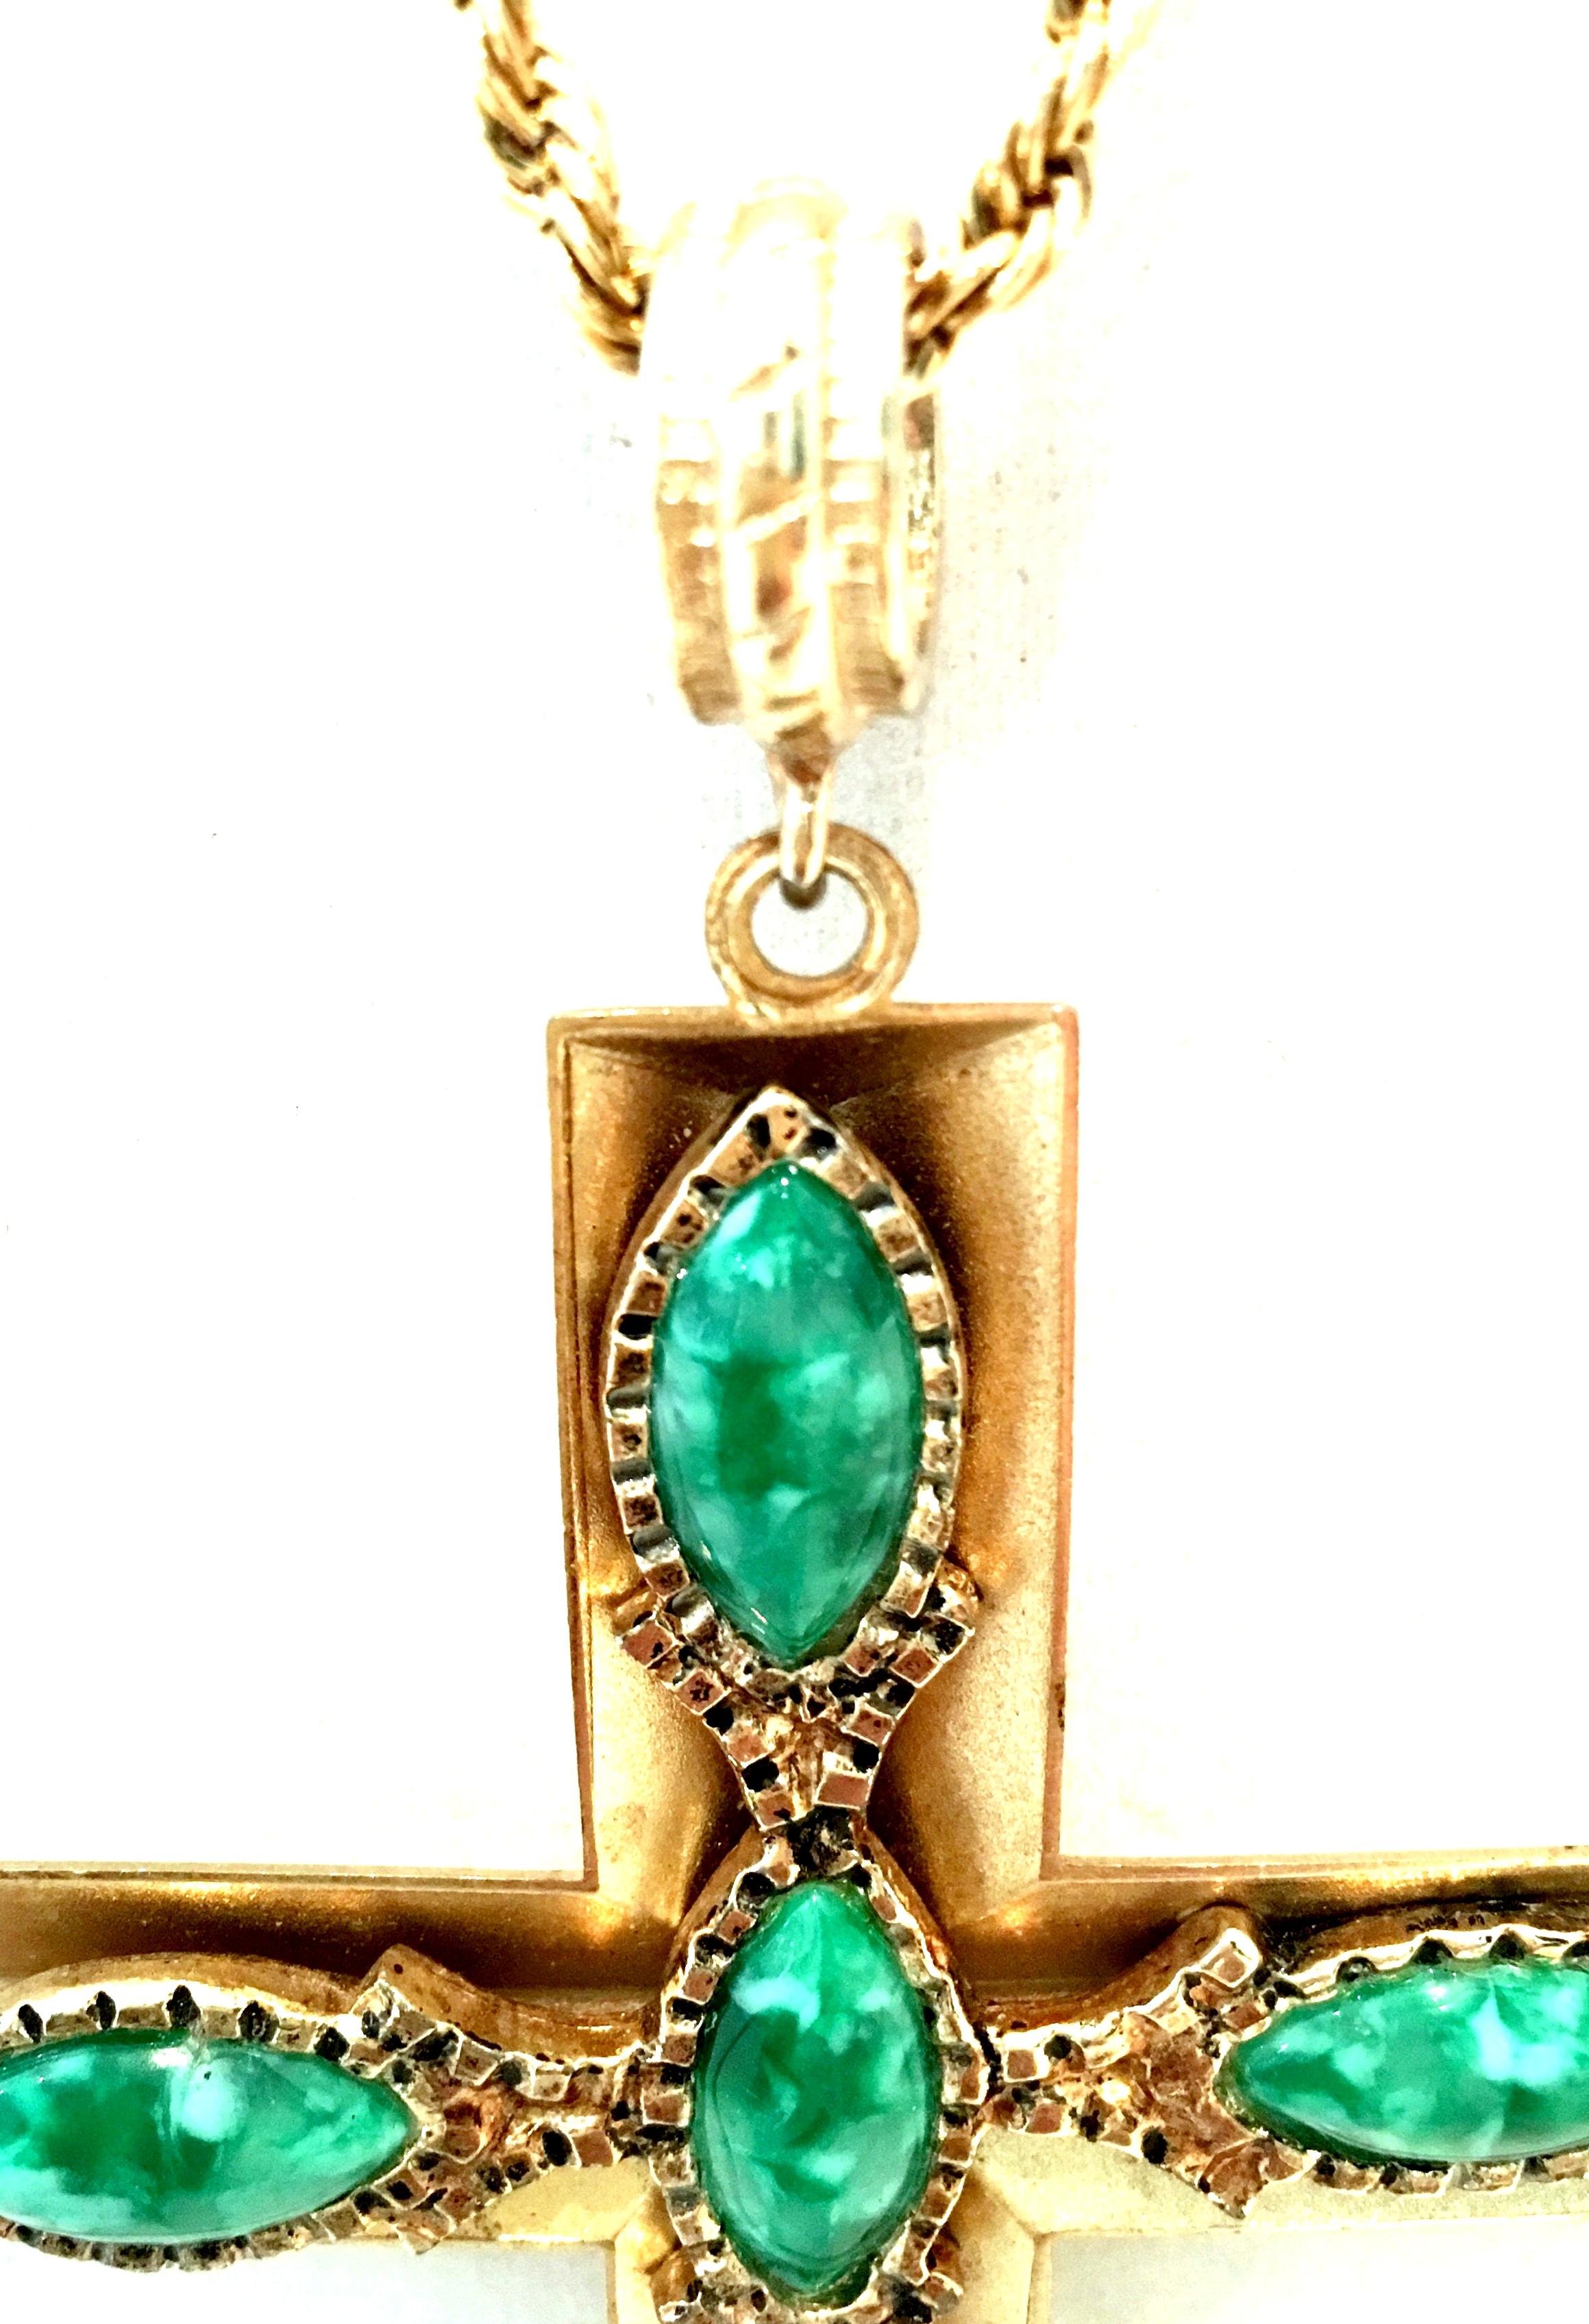 20th Century Gold & Faux Malachite Crucifix Pendant Necklace By, Trifari For Sale 3